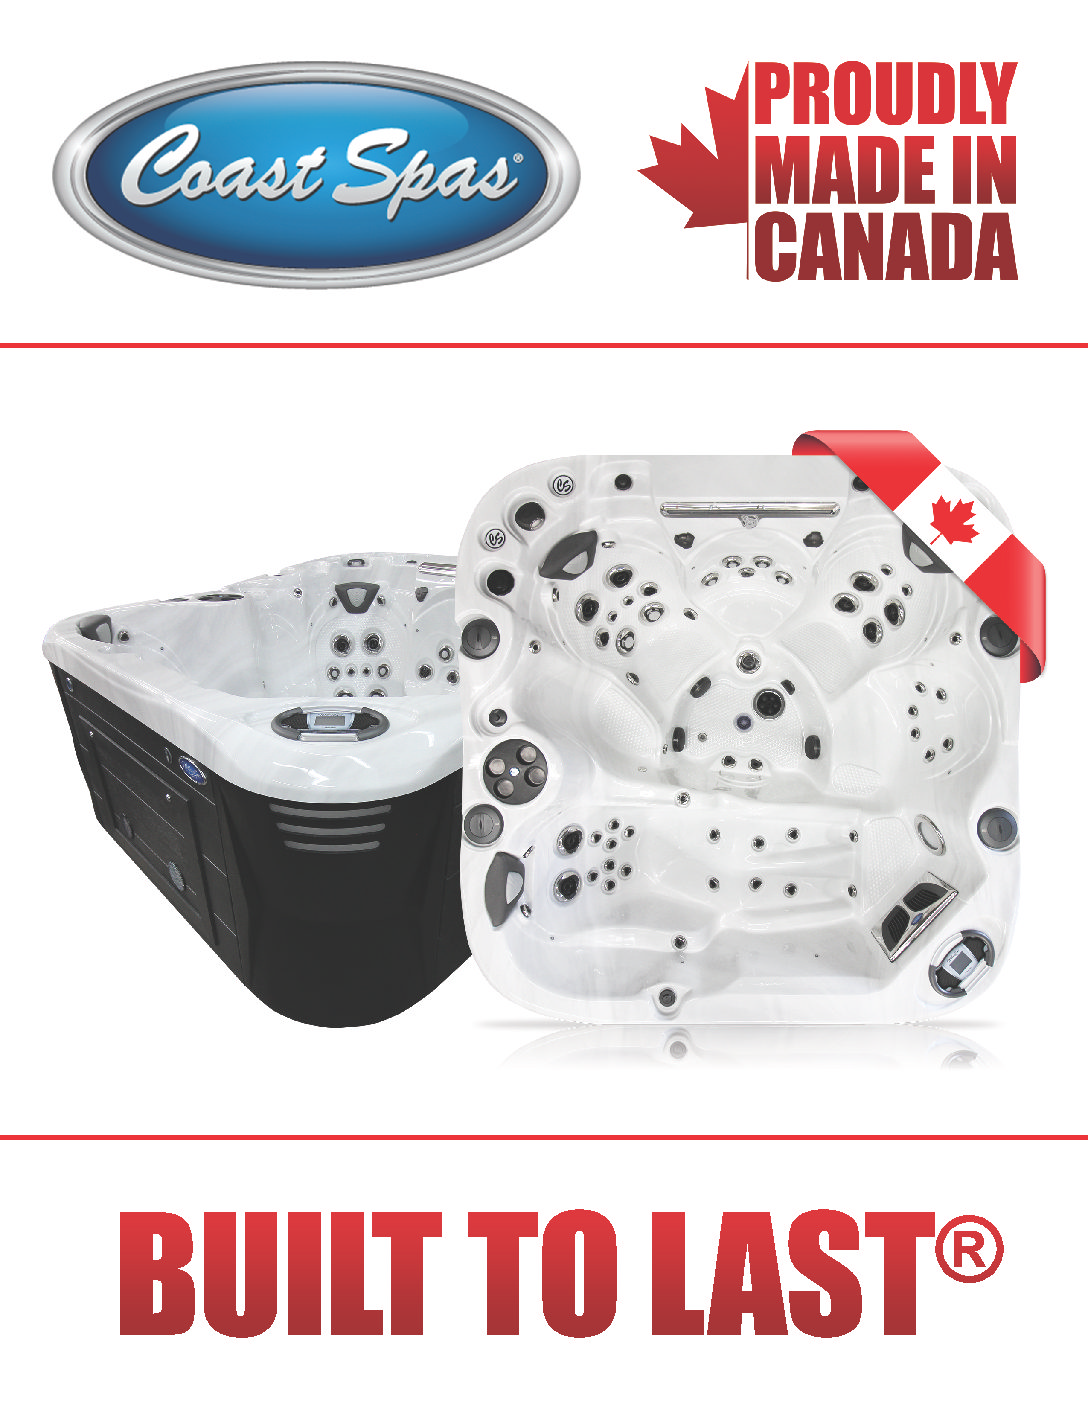 Canadian-made Coast Spas Hot Tub Staycation Sale!